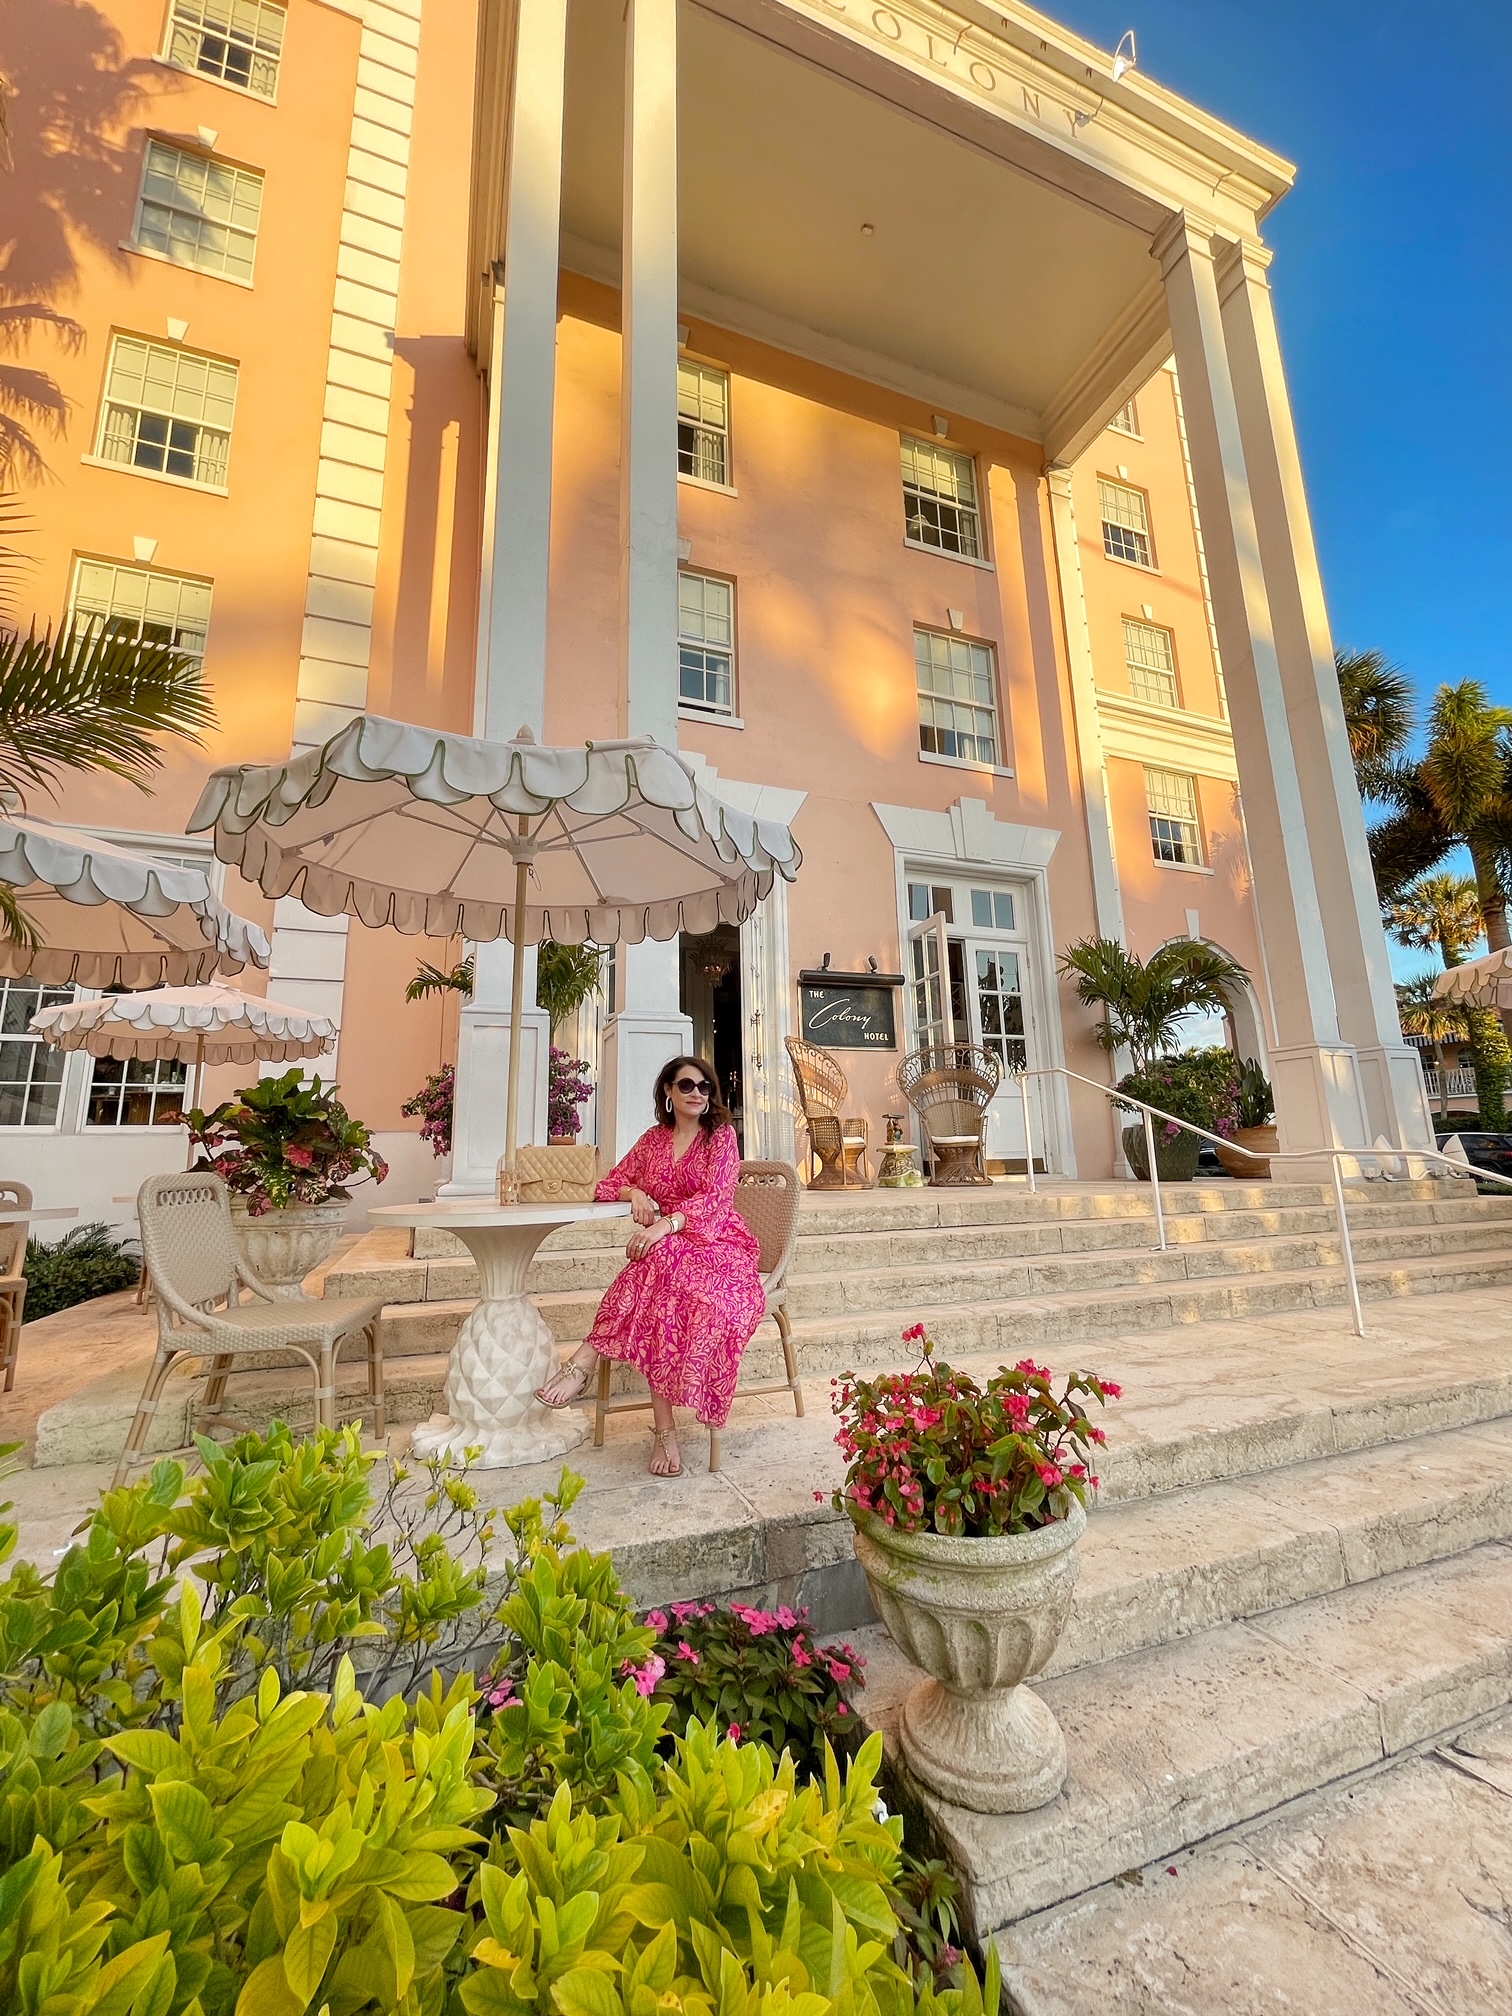 the colony hotel, palm beach, the-alyst.com